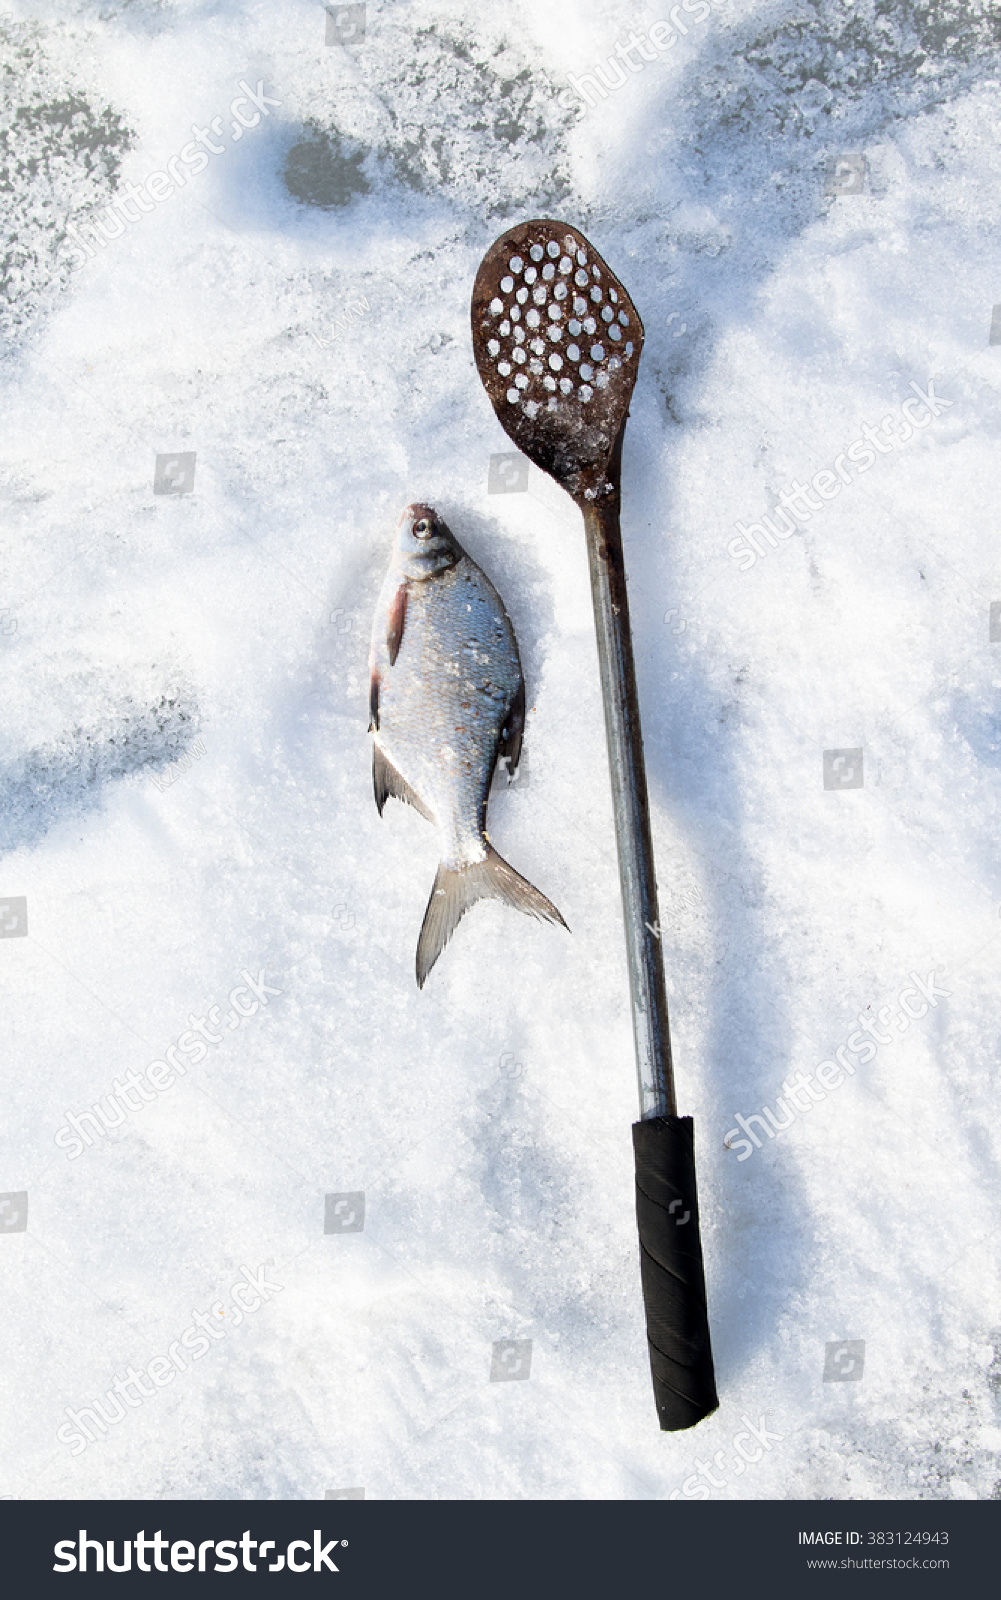 Winter fishing, fish on ice #383124943